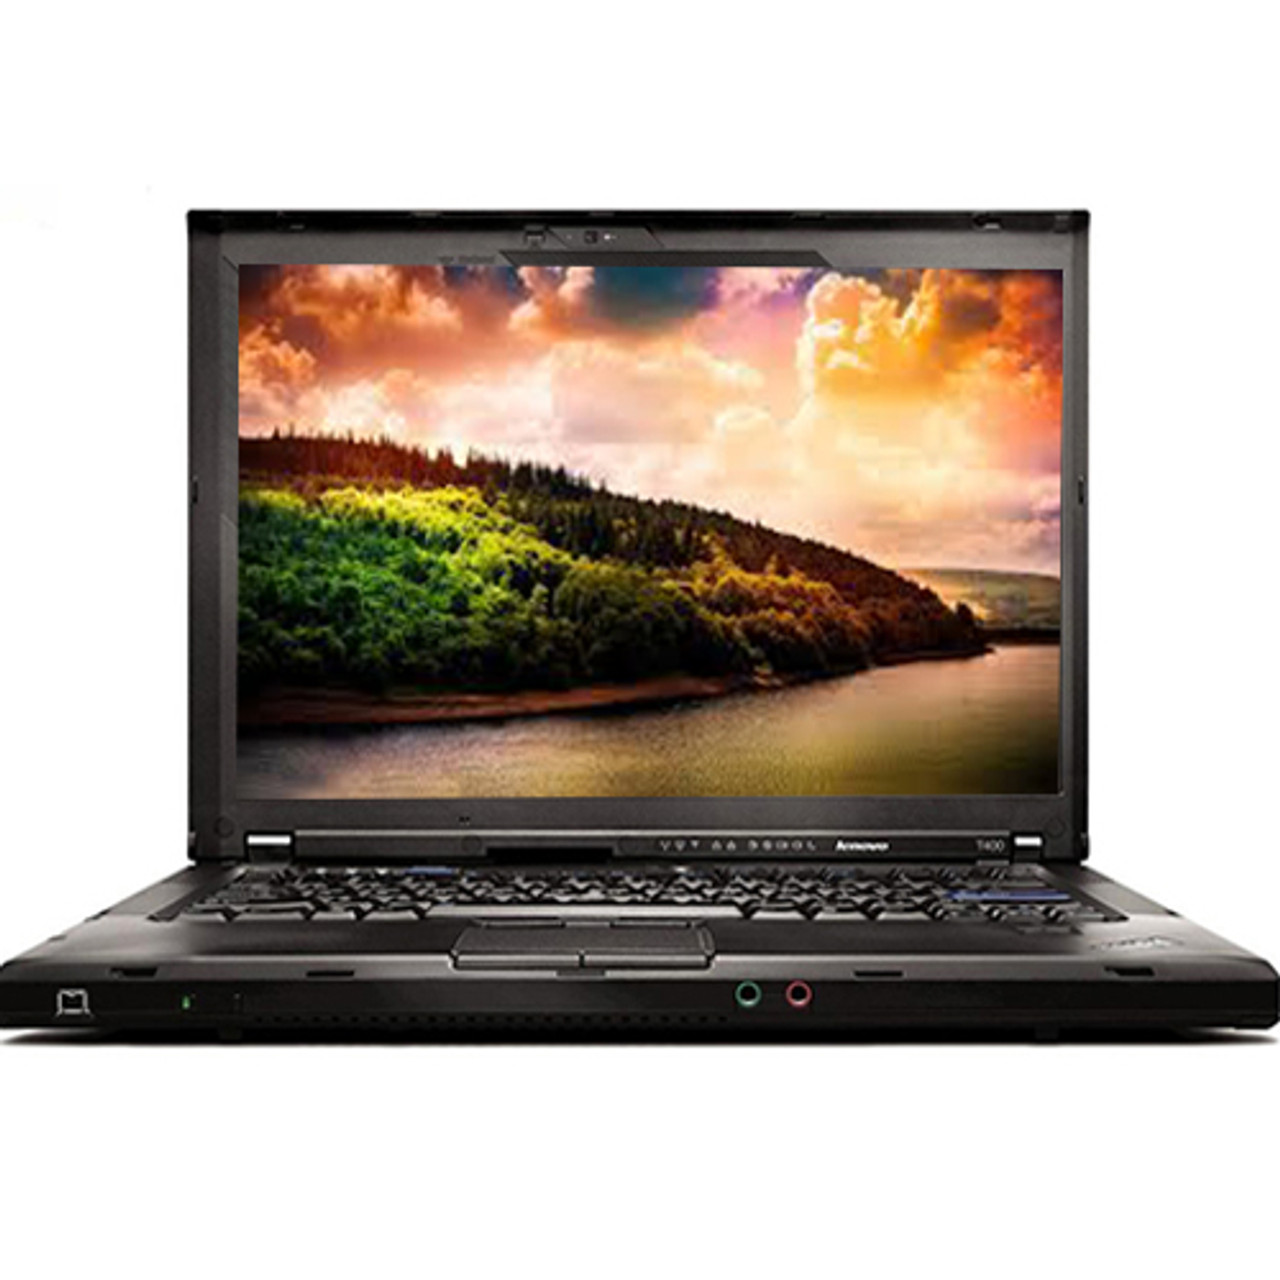 Lenovo ThinkPad Laptop T430 14" Core i5-3320m 2.6GHz 8GB 500GB Windows 10-64 Home WiFi